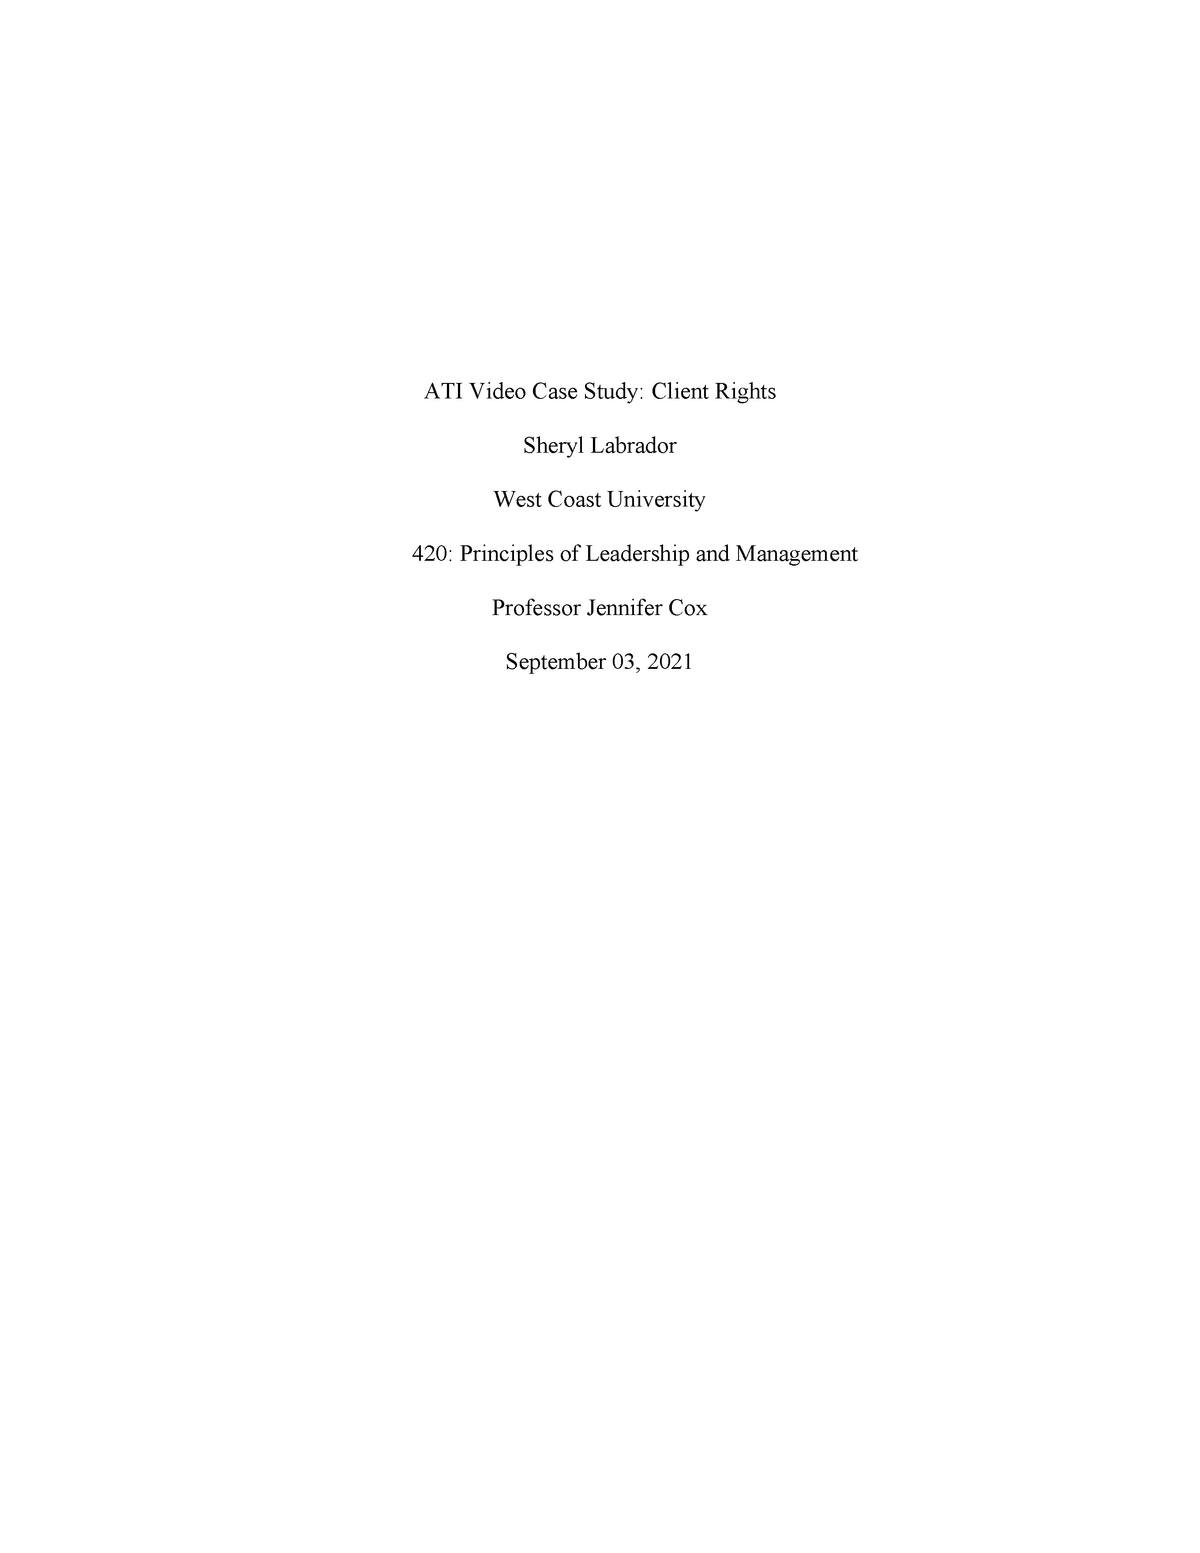 ati case study client rights